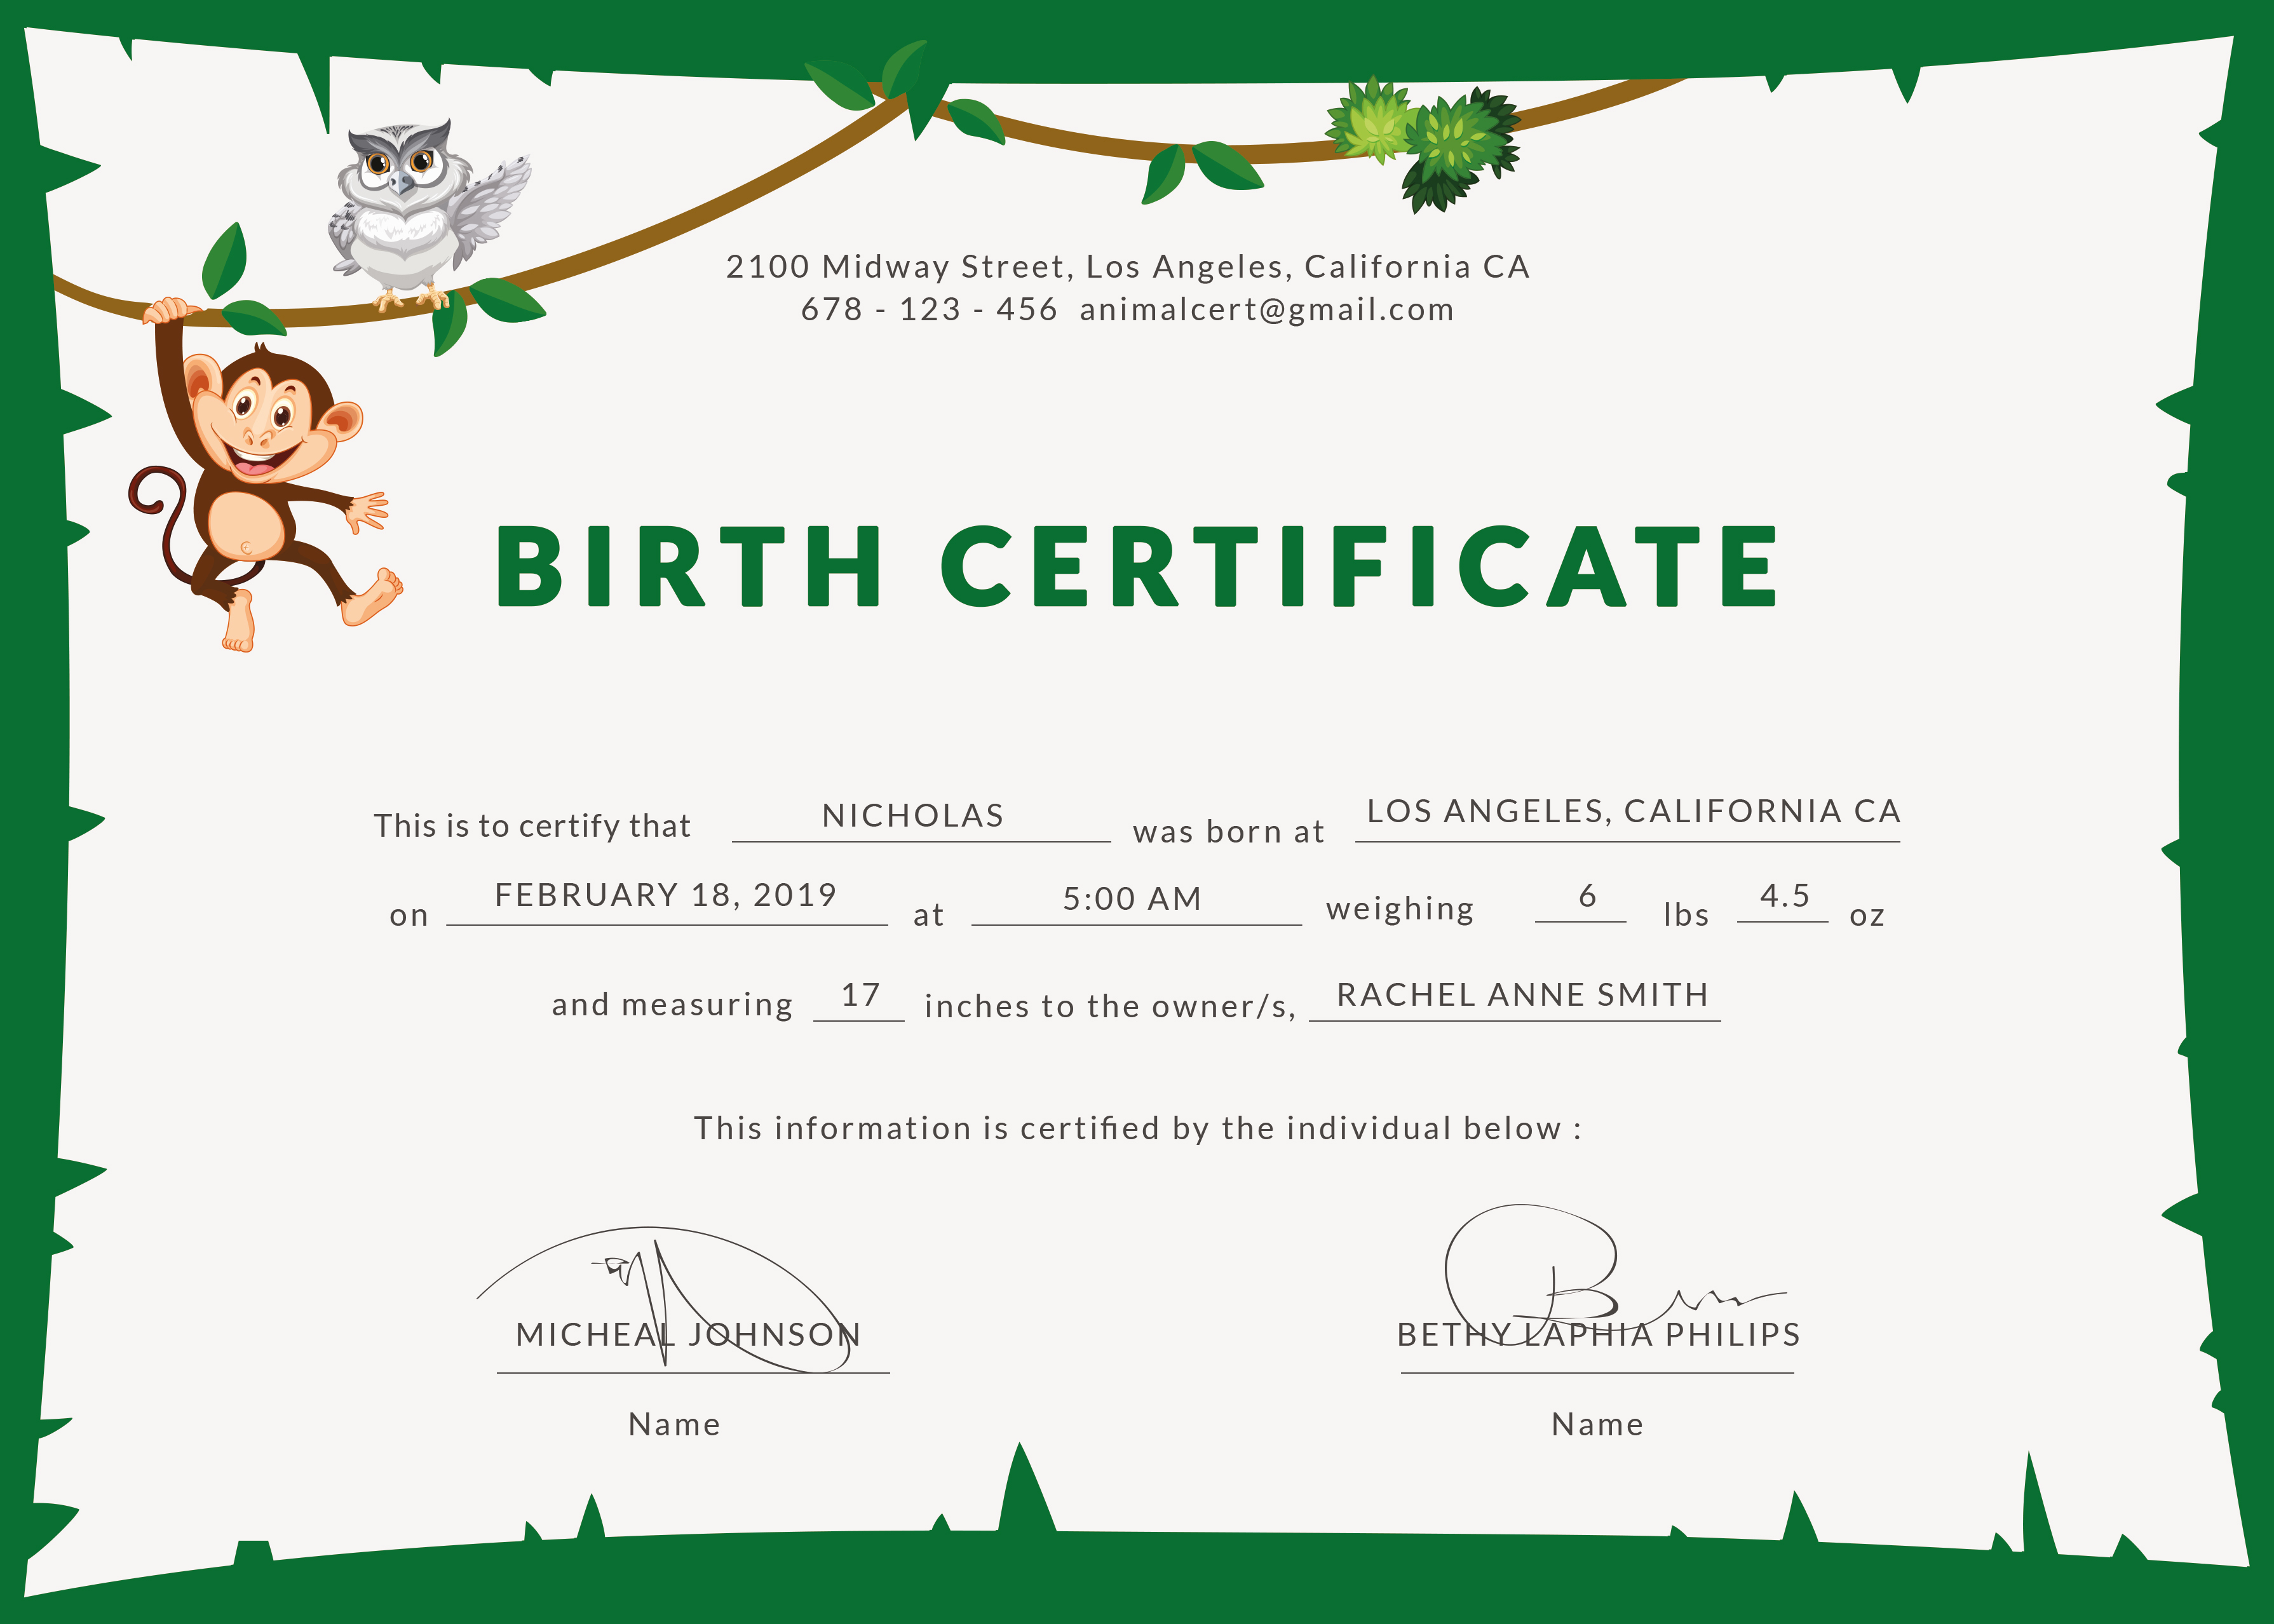 copy of certified birth certificate